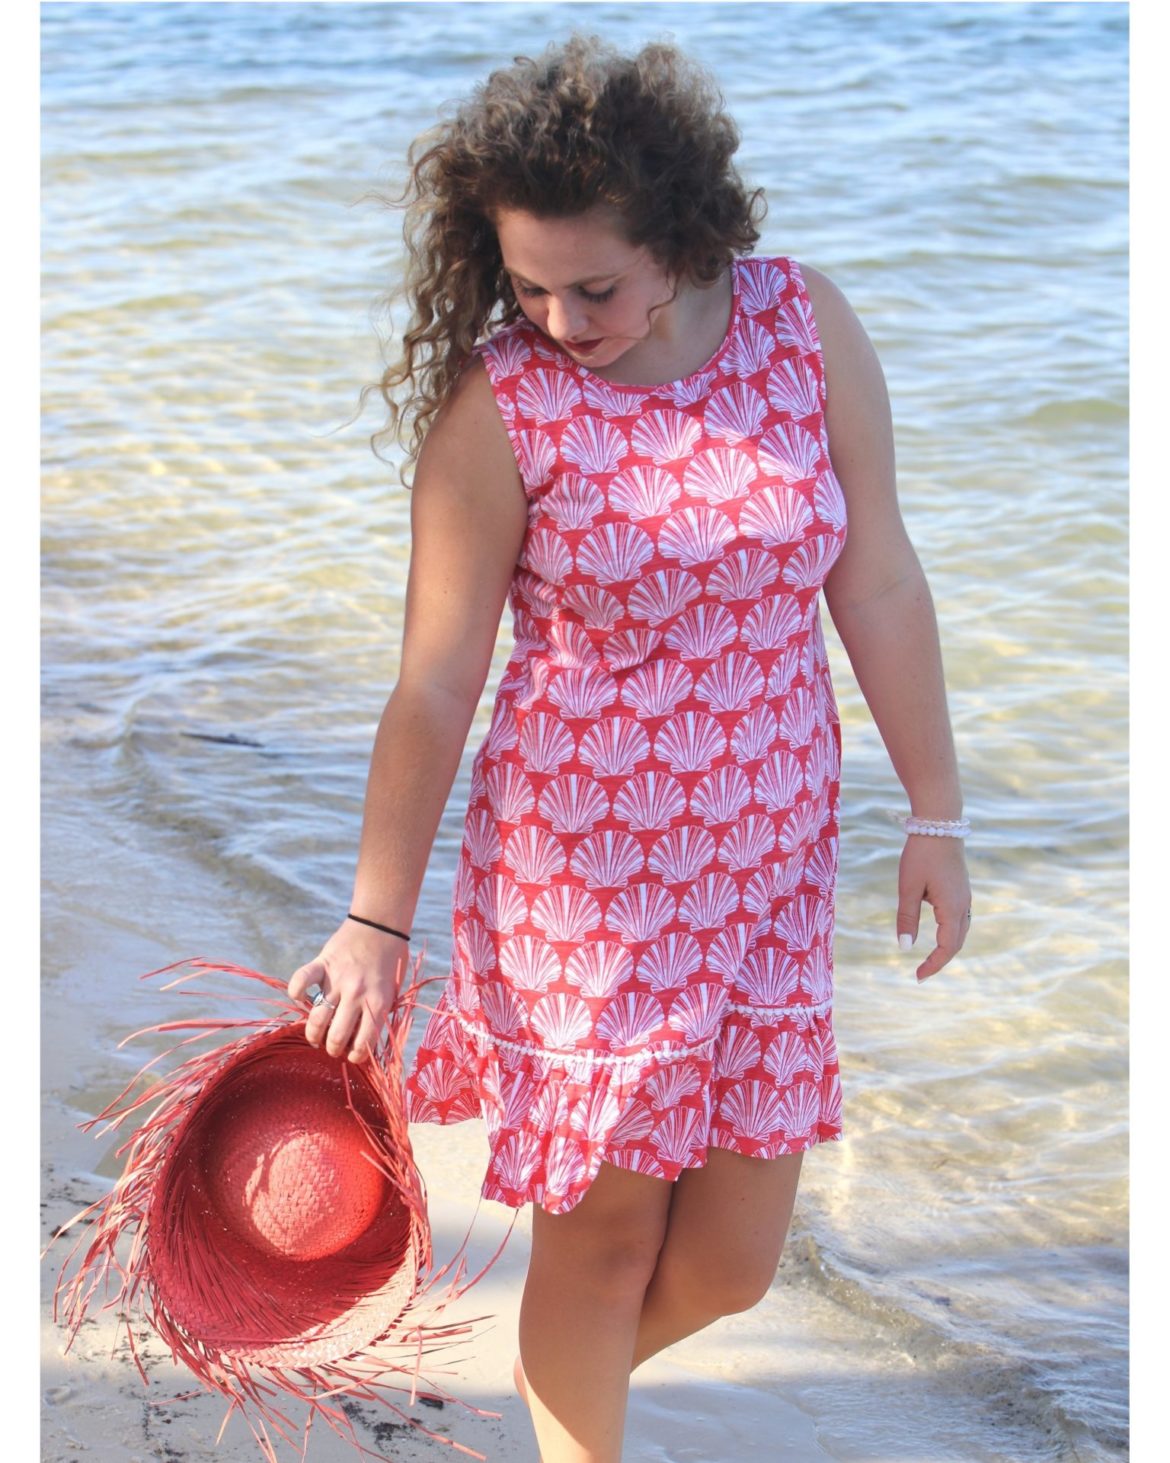 West-Indies-Cotton-Tank-Beach-Dress-Seashells-Model-on-beach-front-view